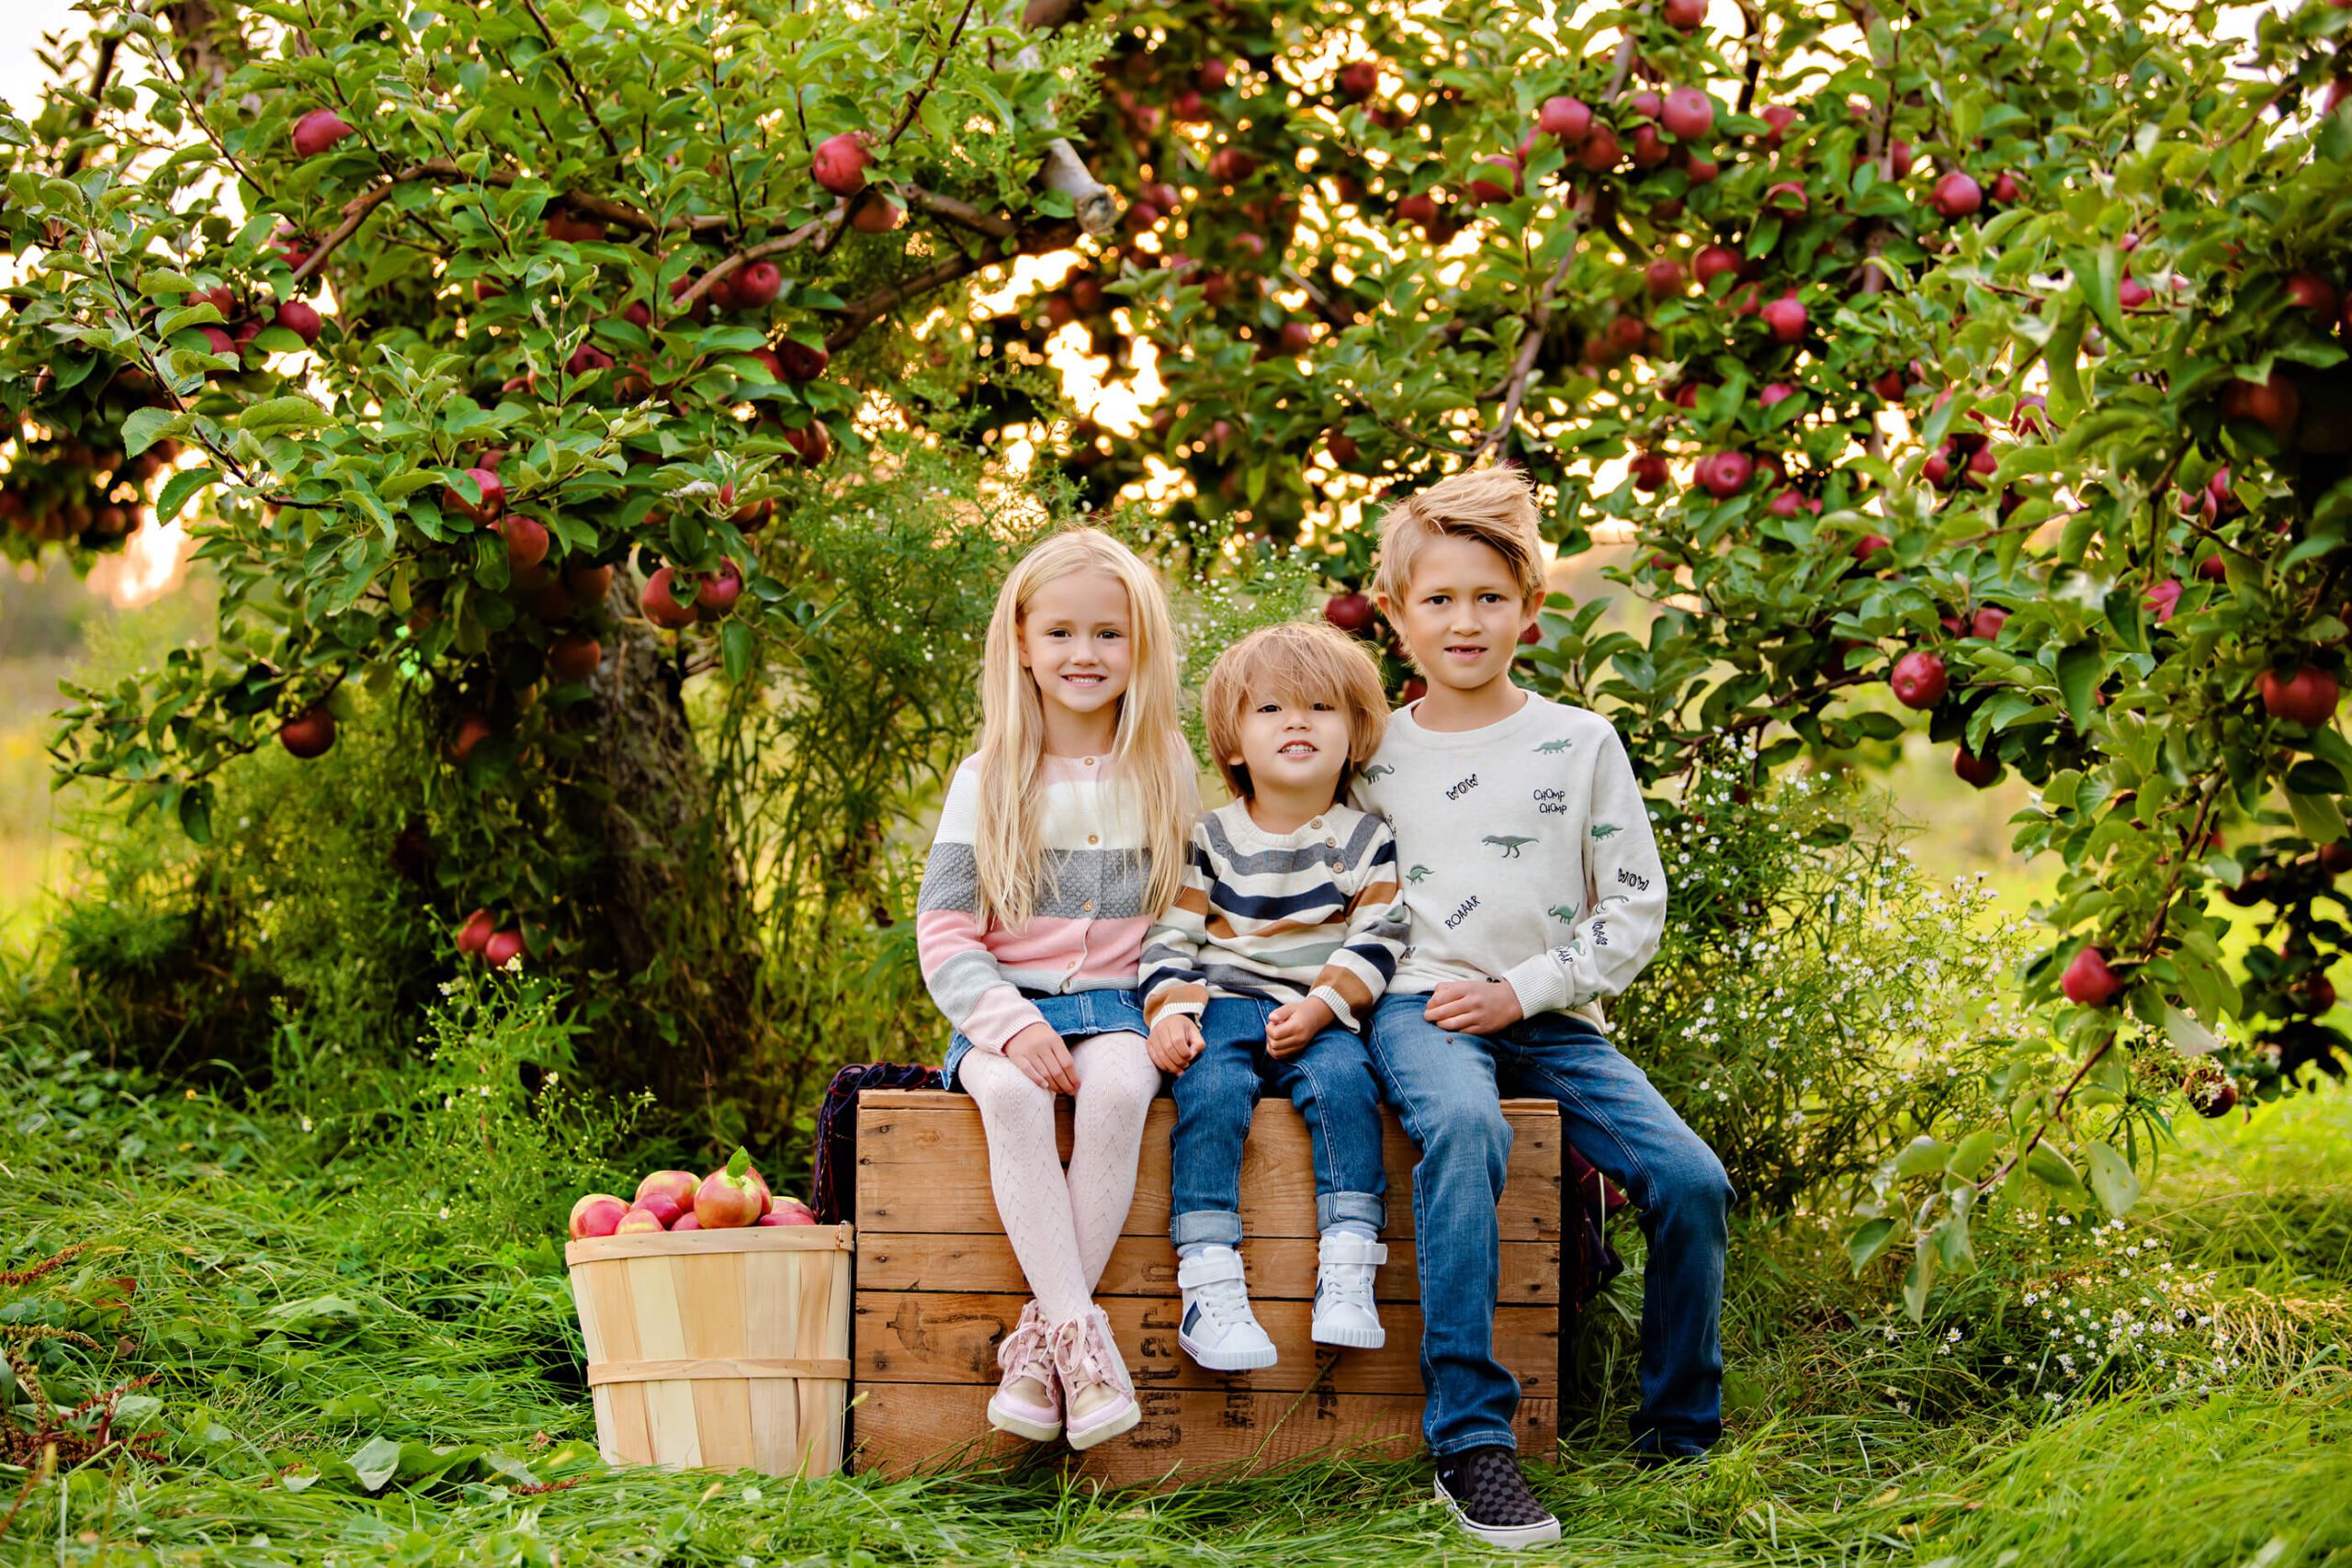 Milton Family photographer apple mini session